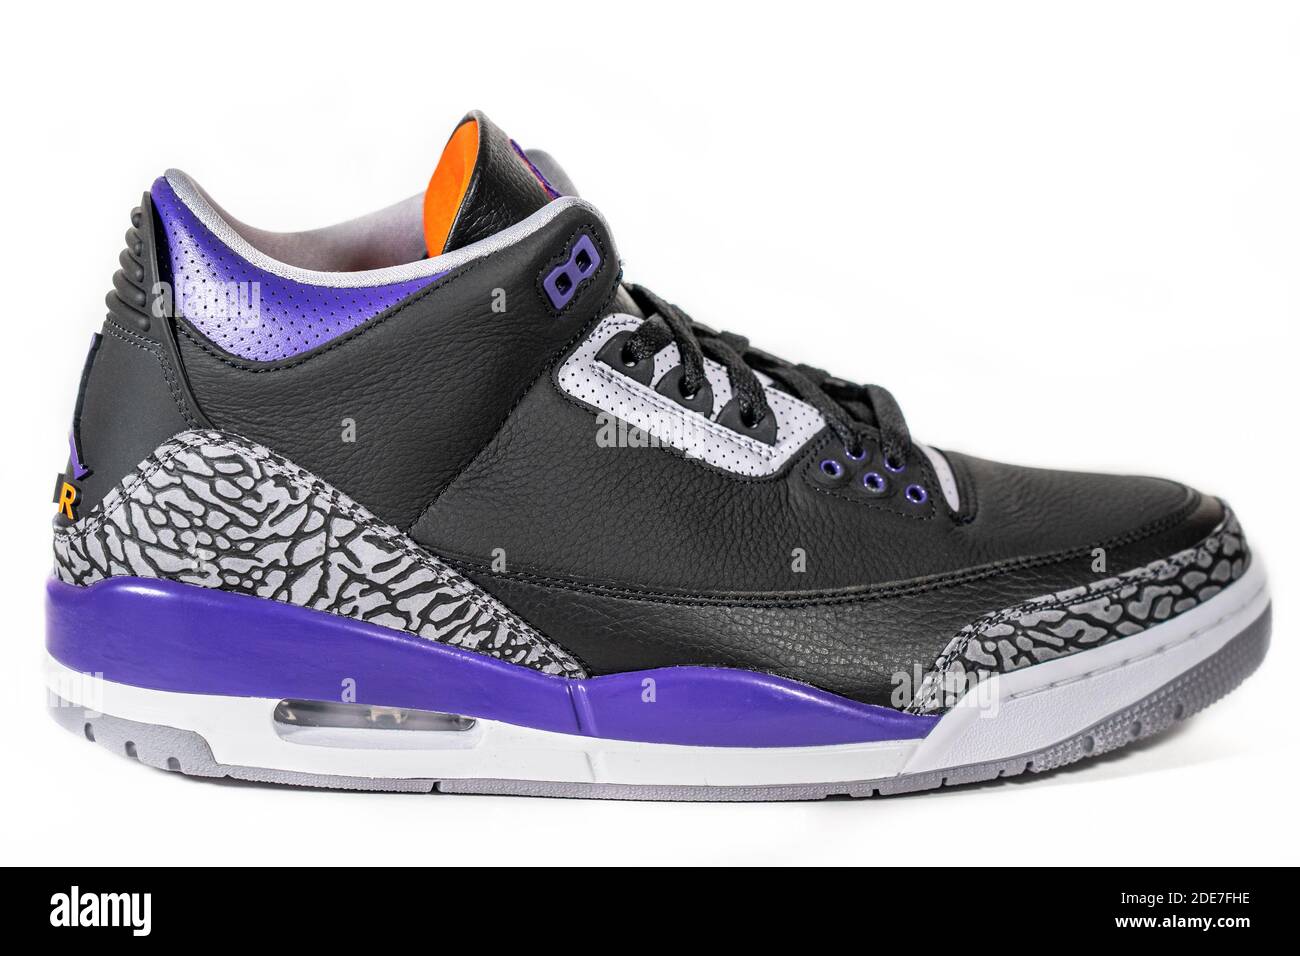 Air Jordan 3 Retro Court Purple - legendäre berühmte Nike und Jordan Marke  Retro Basketball Sneaker oder Sportschuhe, jetzt Mode und Lifestyle Schuhe  : Moskau, Russland - November 2020 Stockfotografie - Alamy